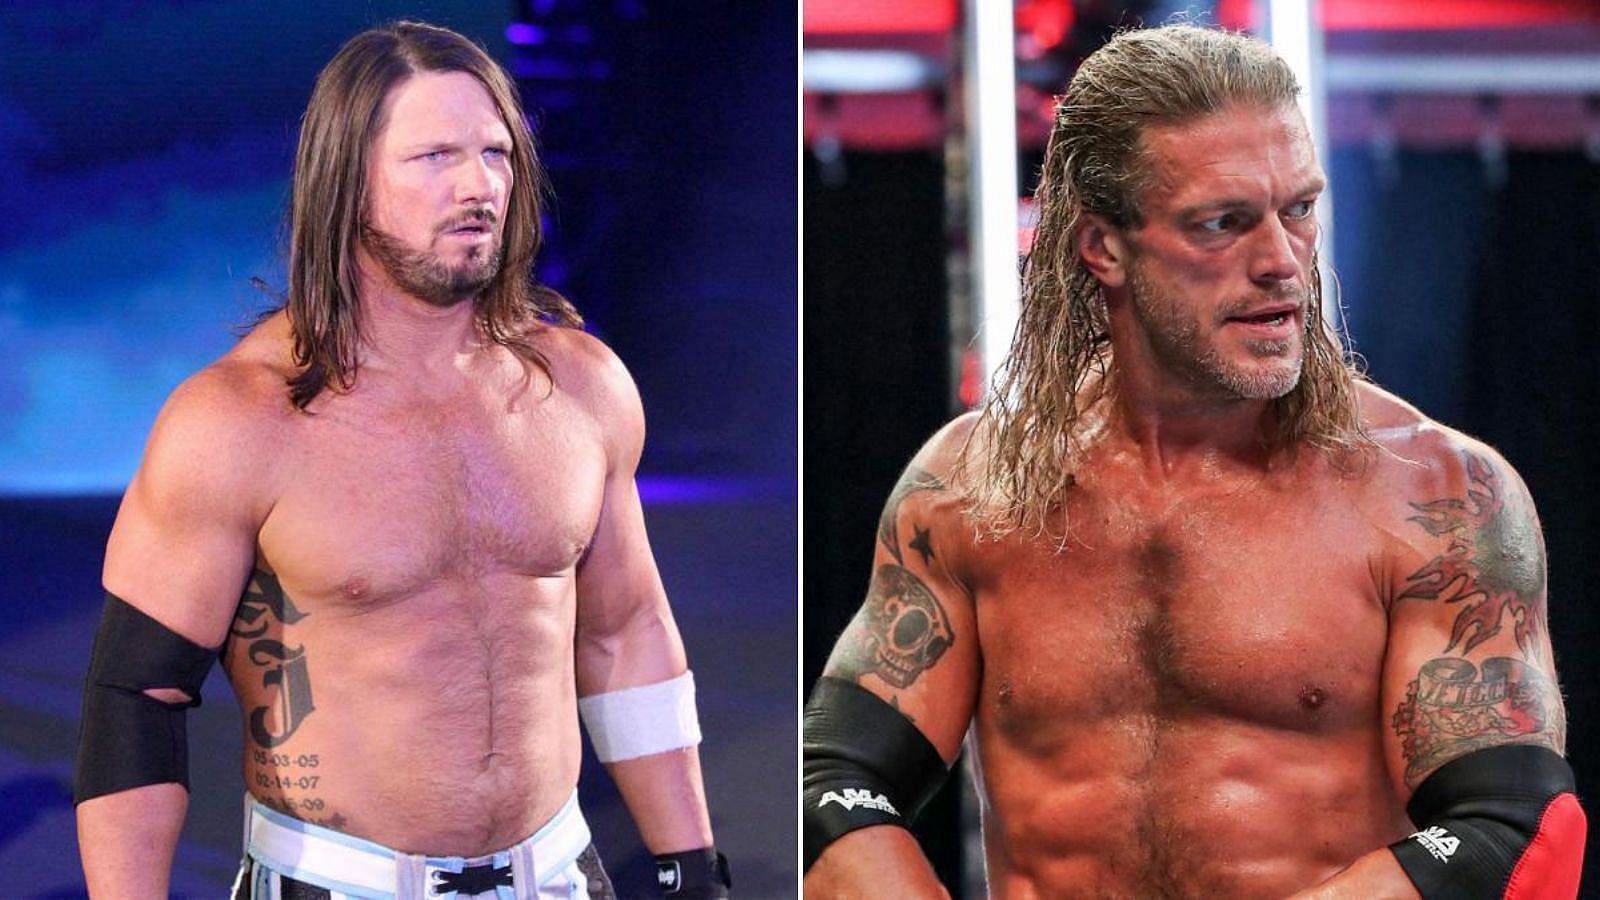 AJ Styles vs. Edge could happen at WWE WrestleMania 38